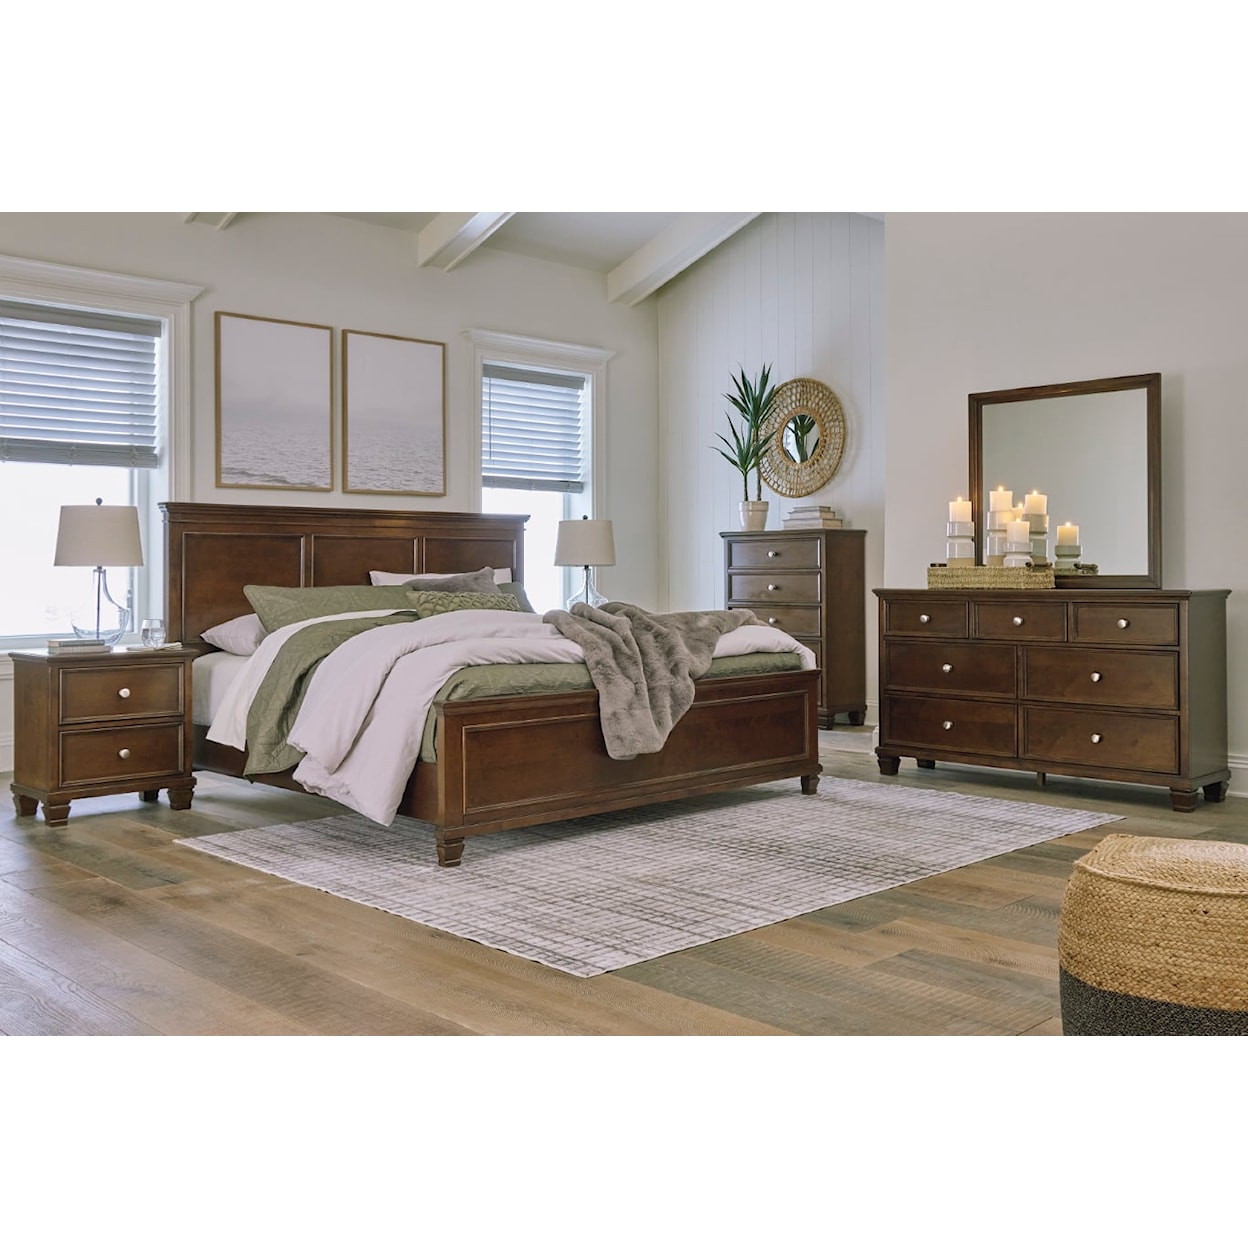 Ashley Furniture Signature Design Danabrin King Bedroom Set